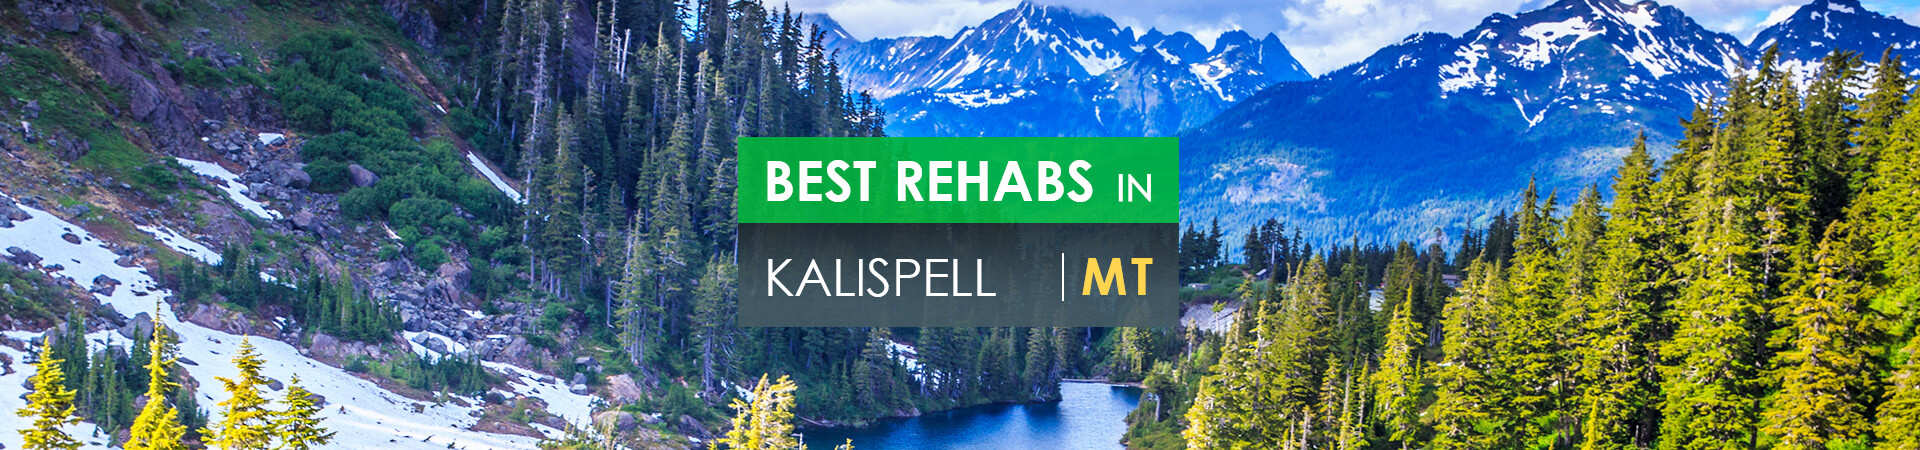 Best rehabs in Kalispell, MT